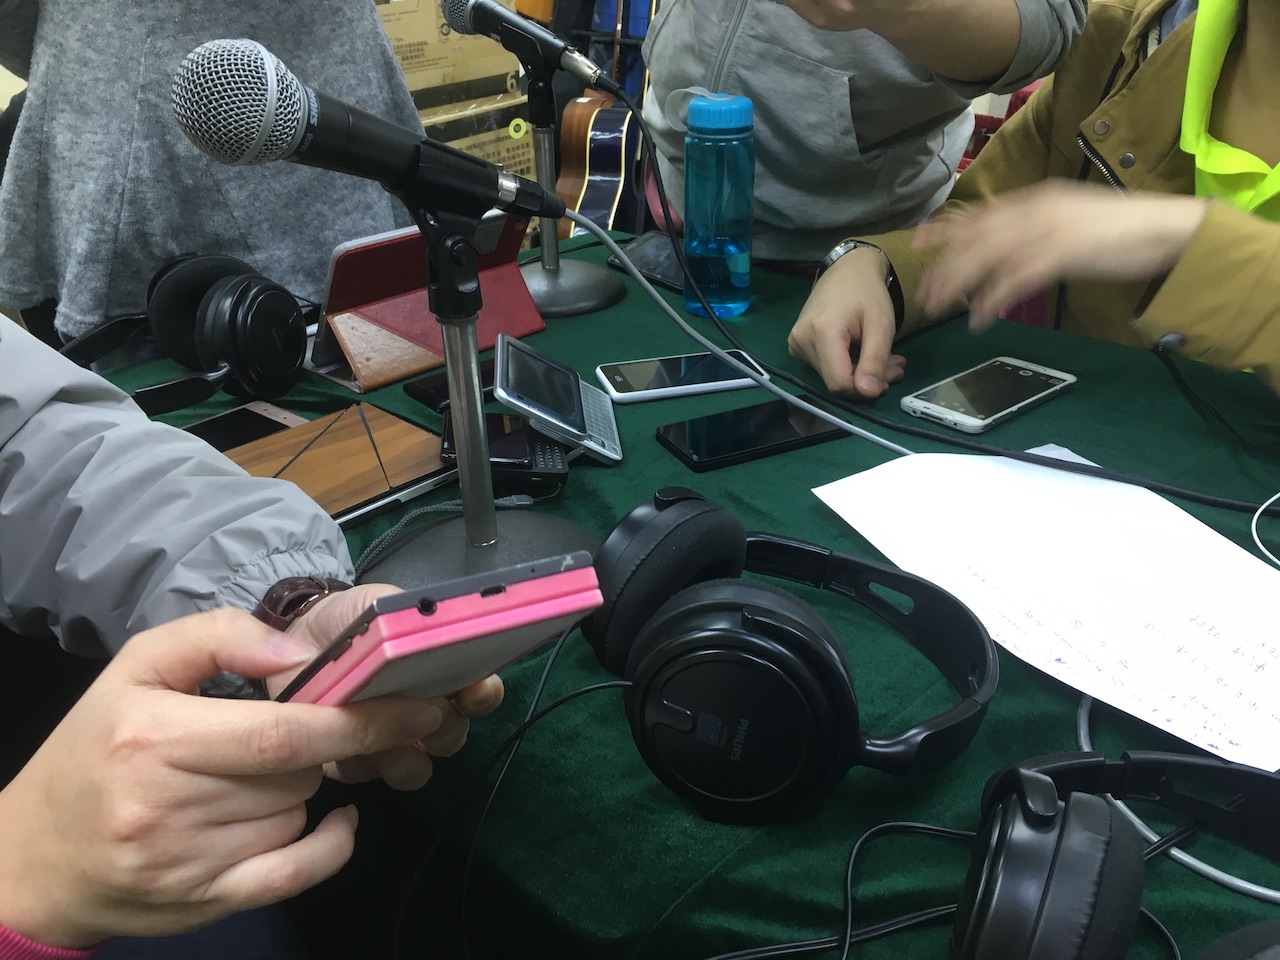 【Firefox OS】香港電台社區參與廣播節目談開源手機 Firefox OS